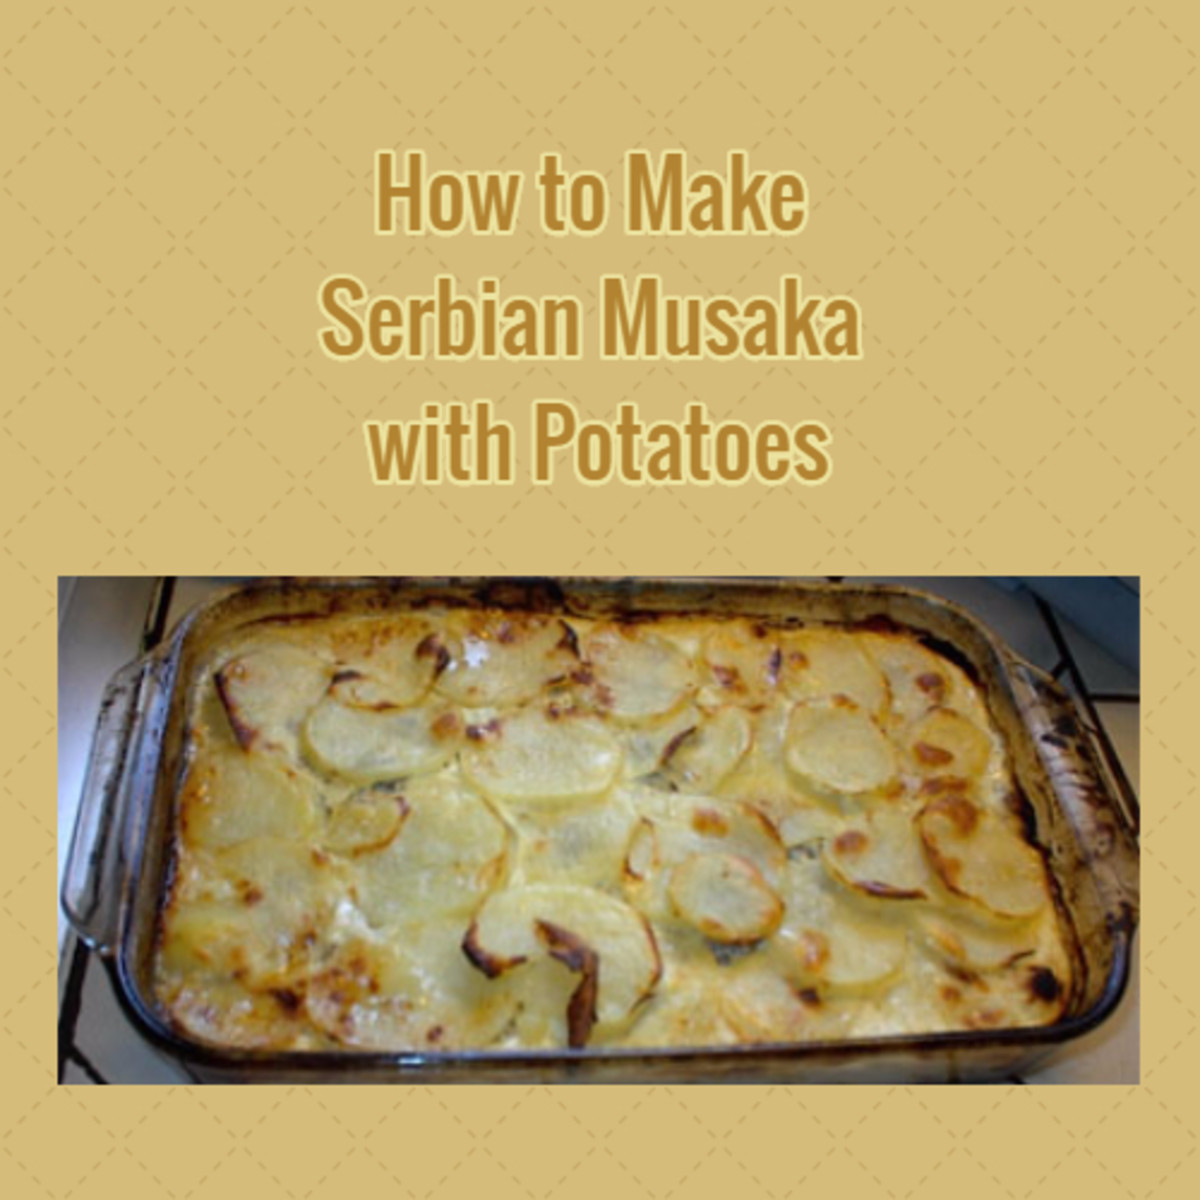 How to Make Serbian Musaka with Potatoes